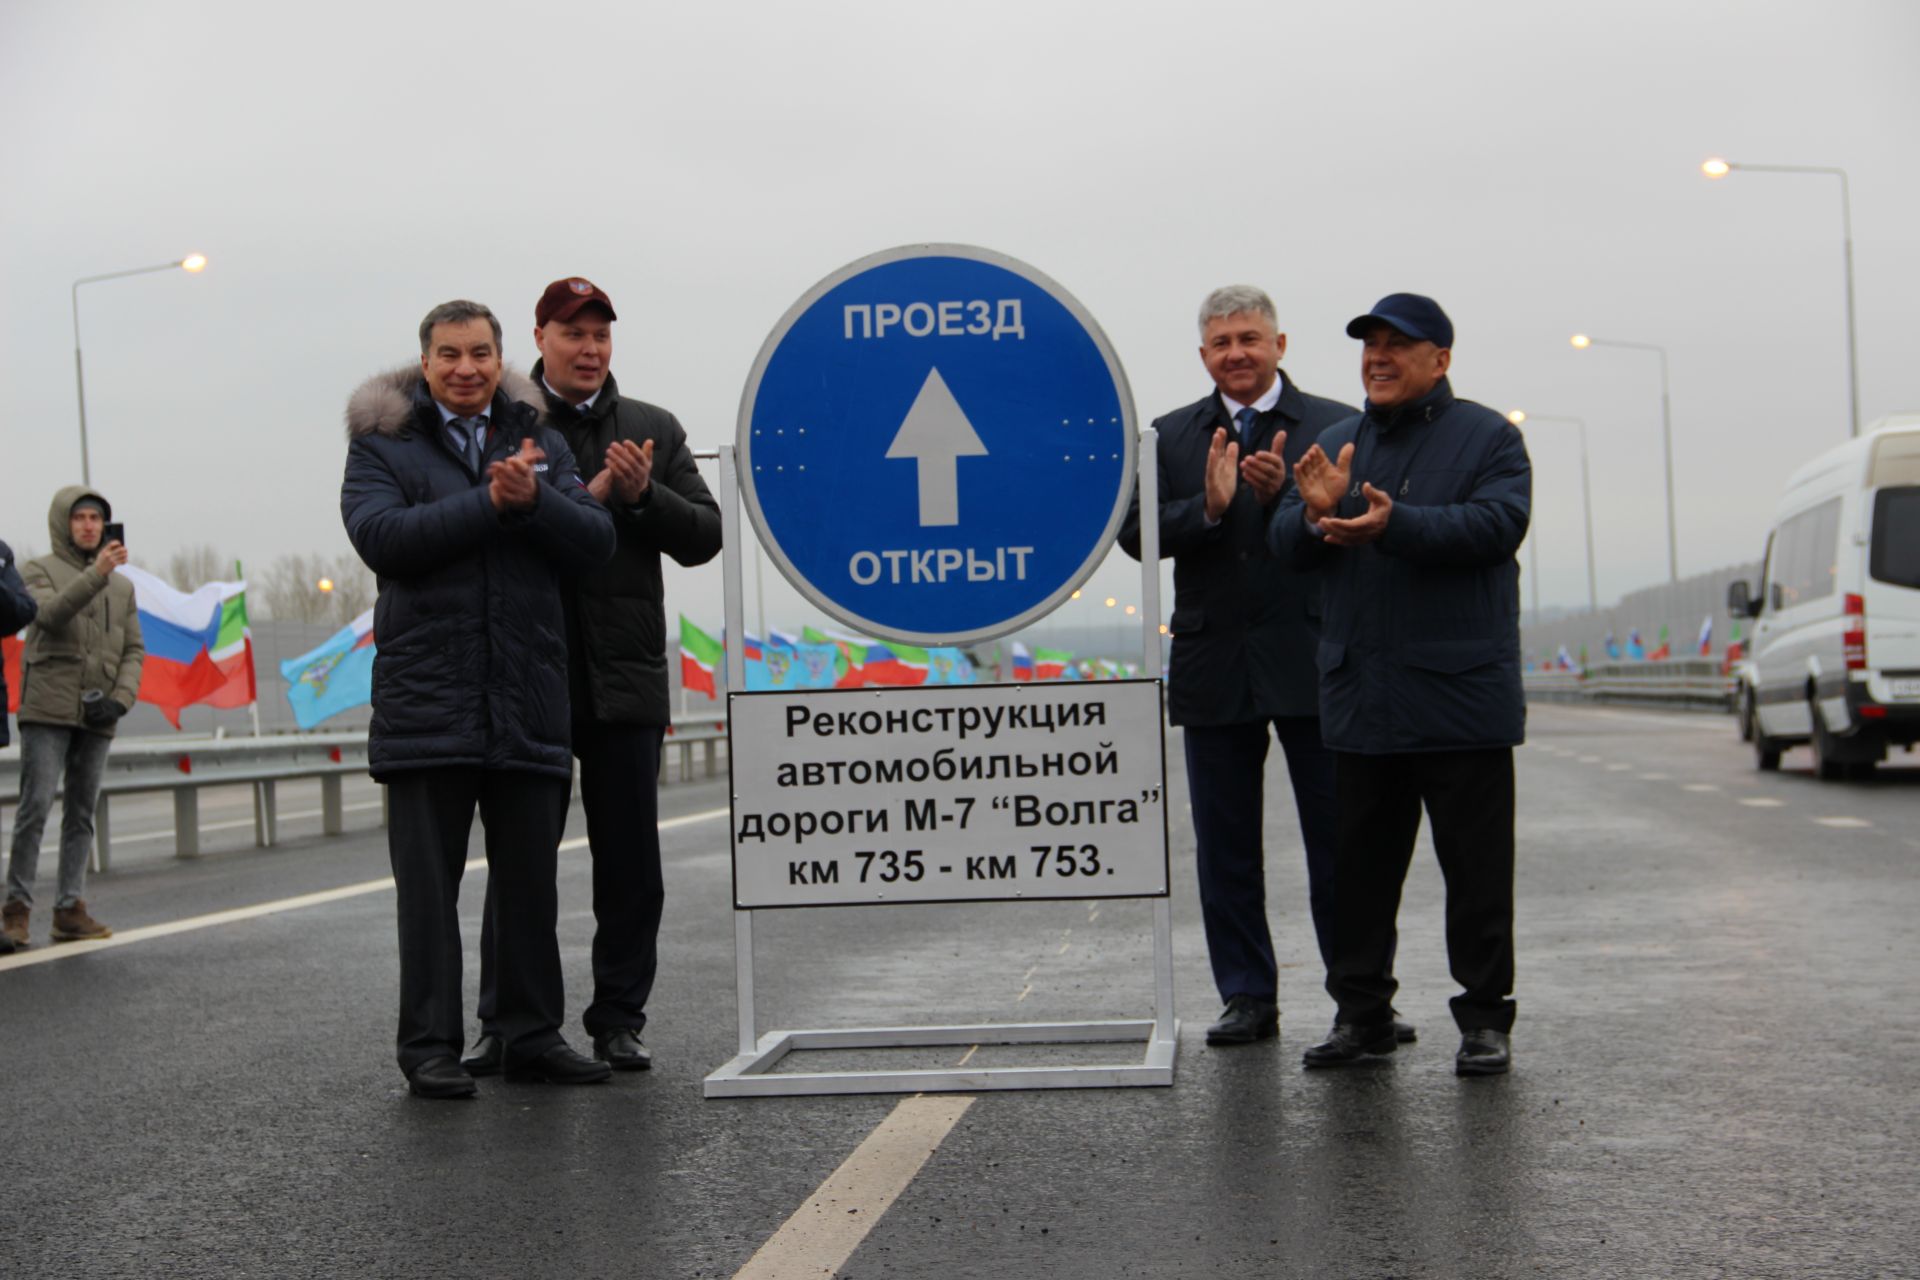 Бүген бәйрәм - реконструкциядән соң М-7 "Волга" трассасының 750нче чакрымы, ягъни Ходяш авылы янындагы юл ачыла